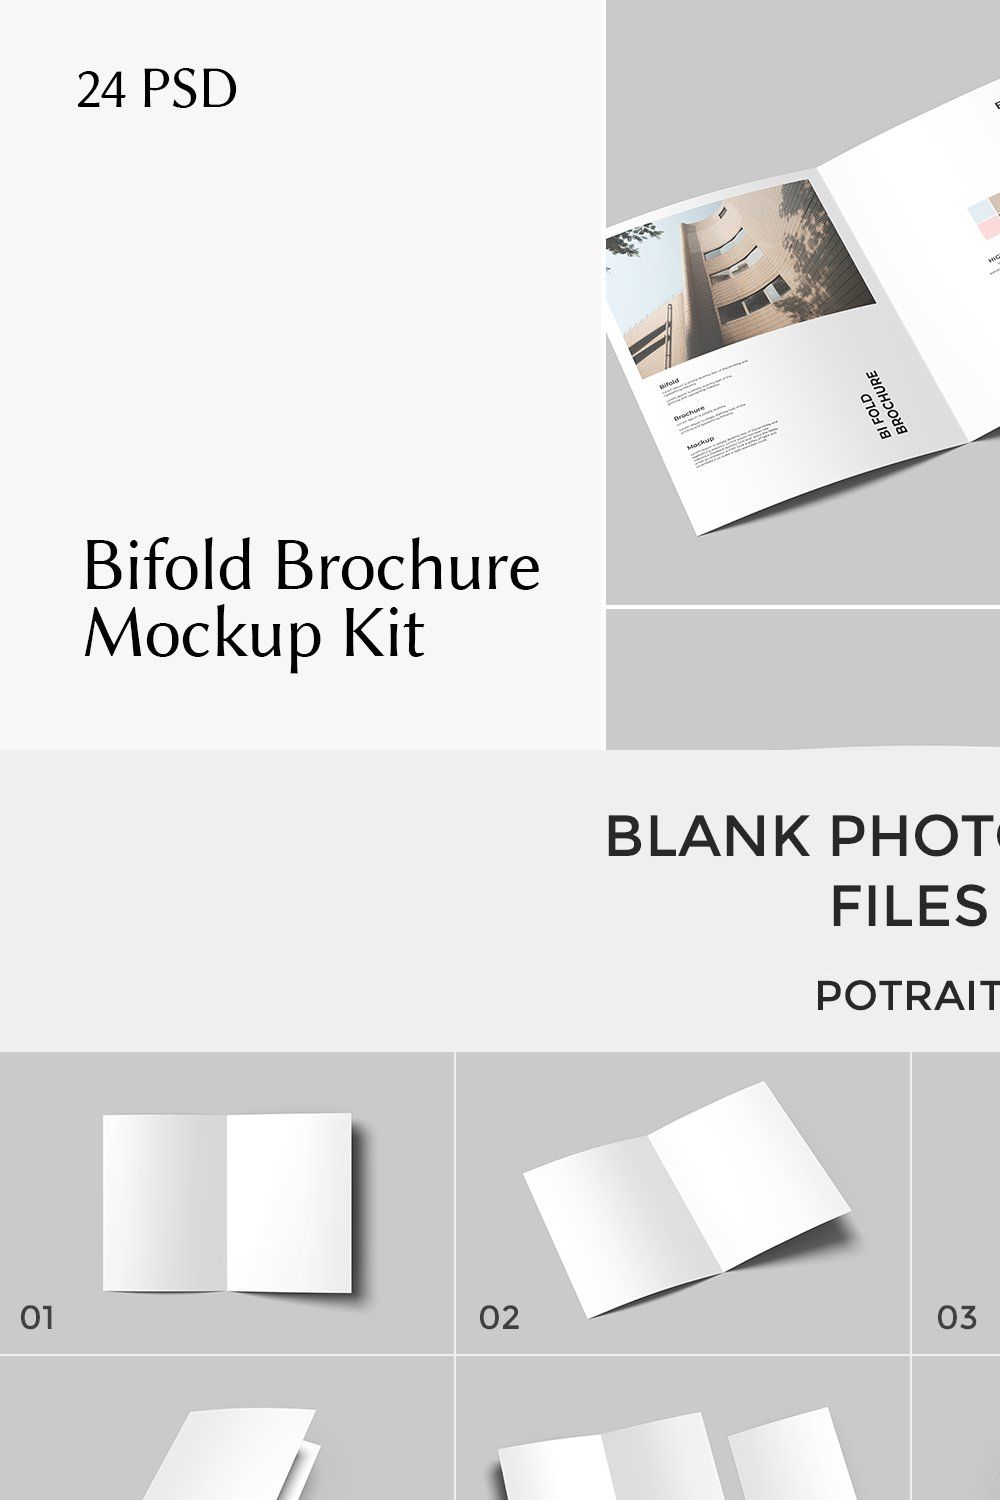 A5 Bifold Brochure Mockup Kit pinterest preview image.